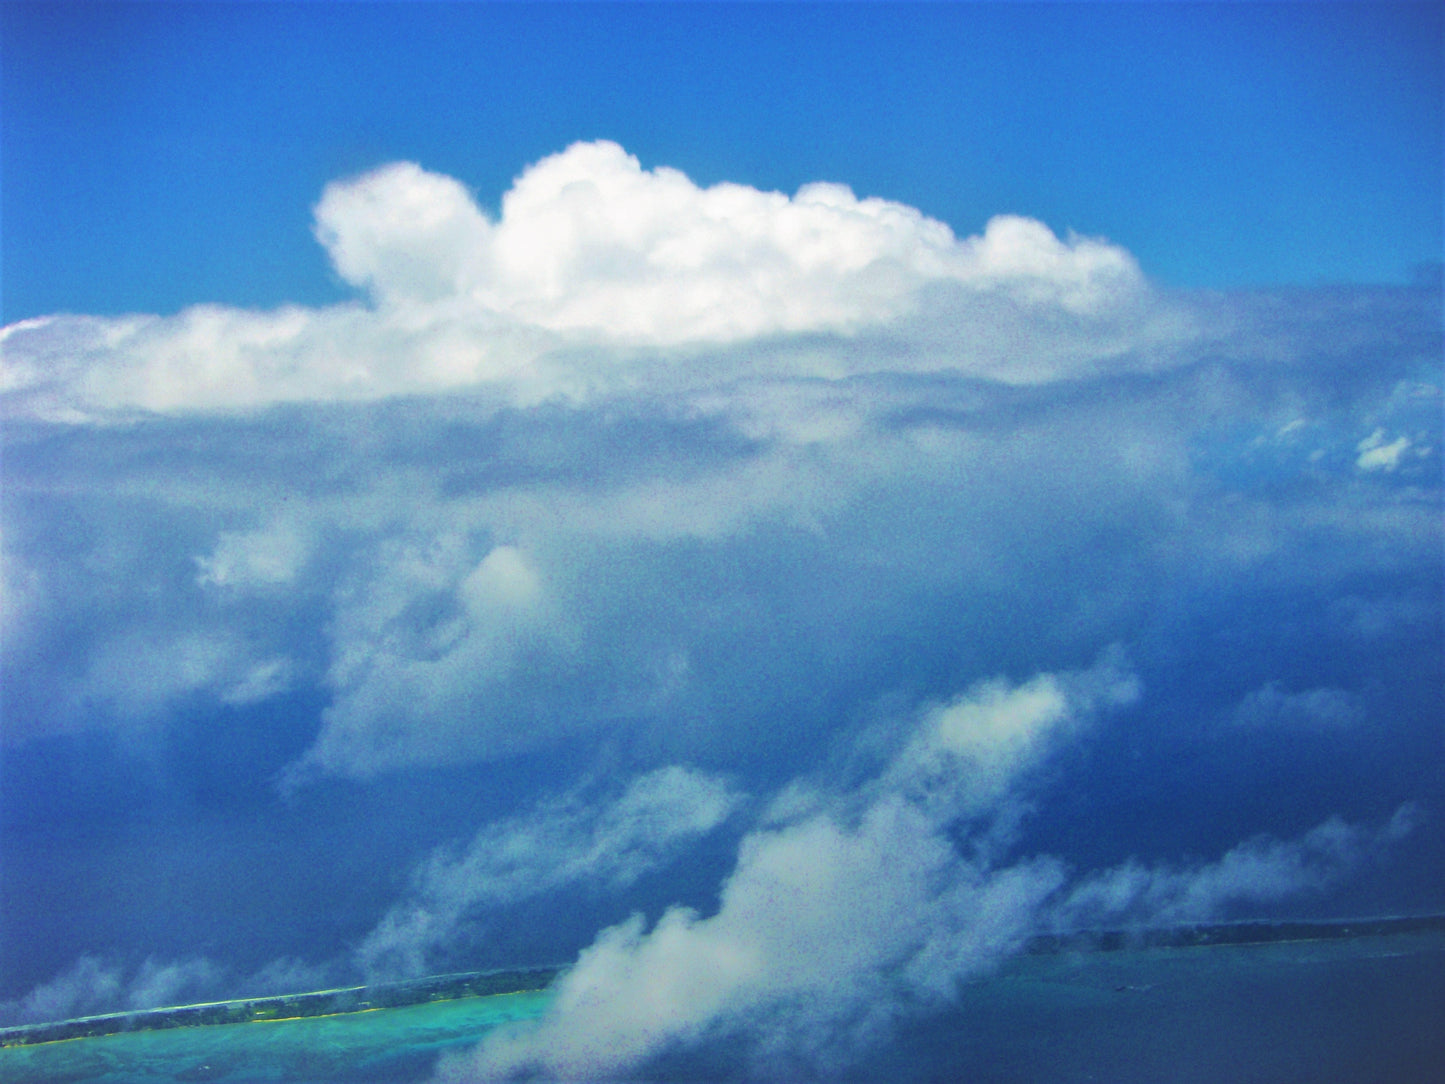 Majuro Atoll (Marshall islands)